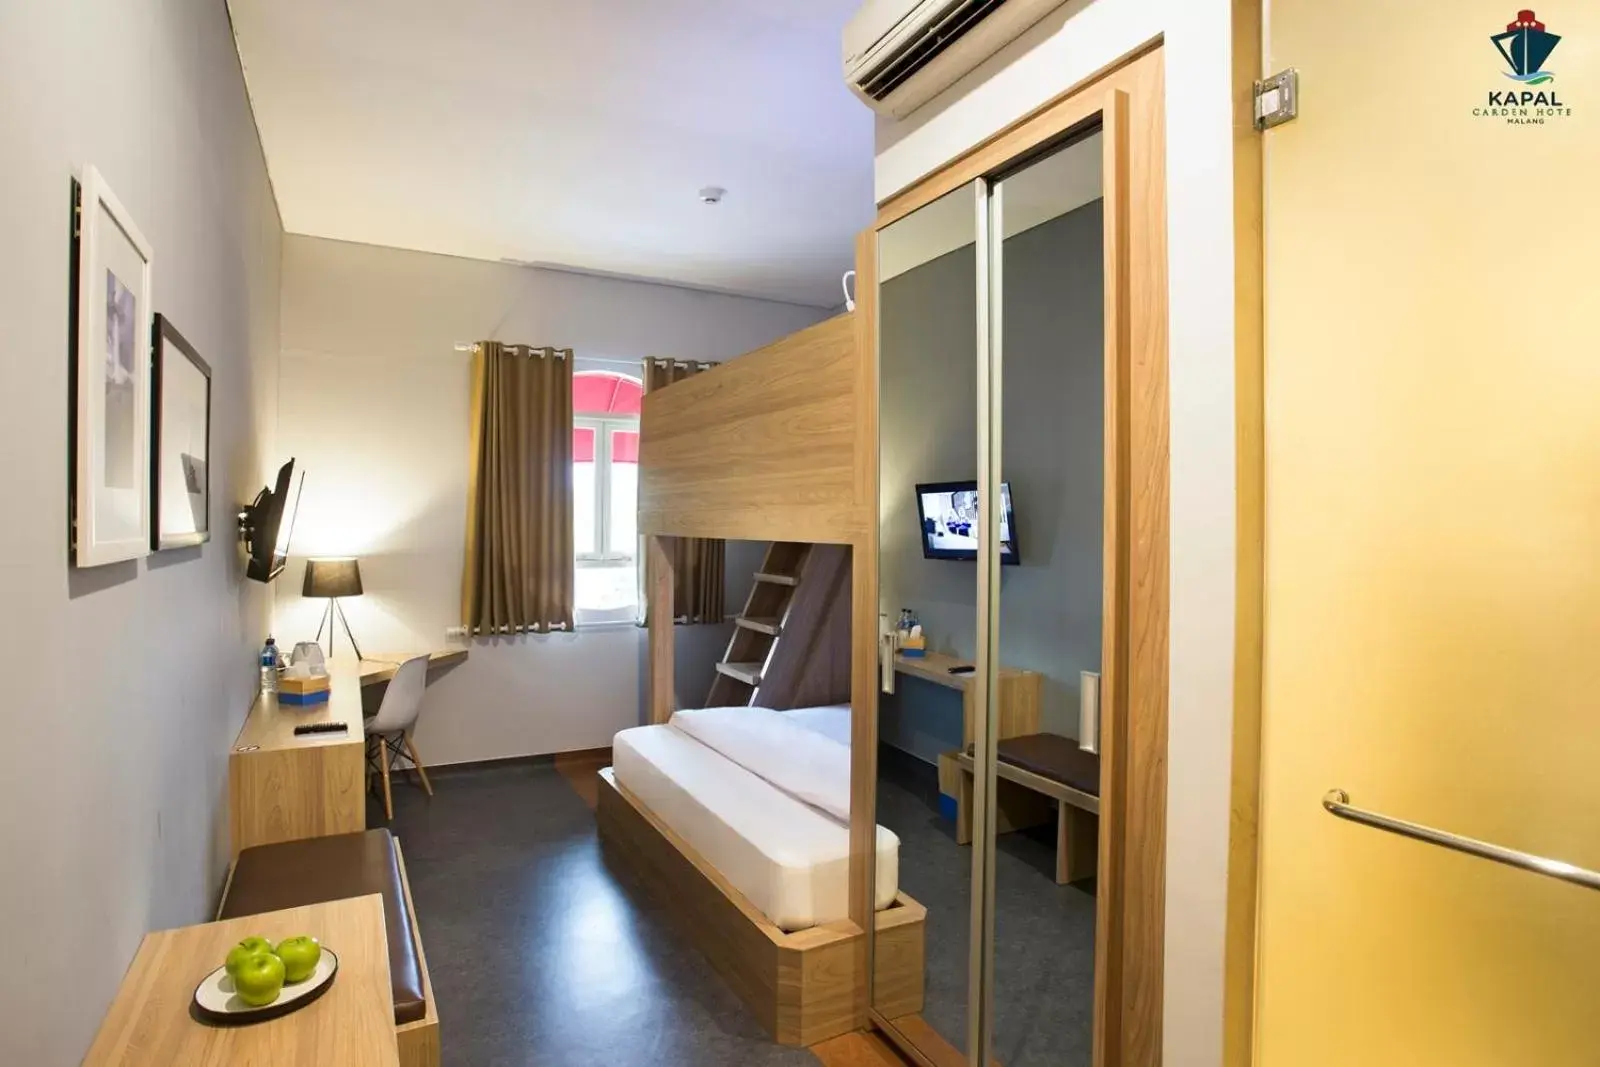 bunk bed in Kapal Garden Hotel Malang